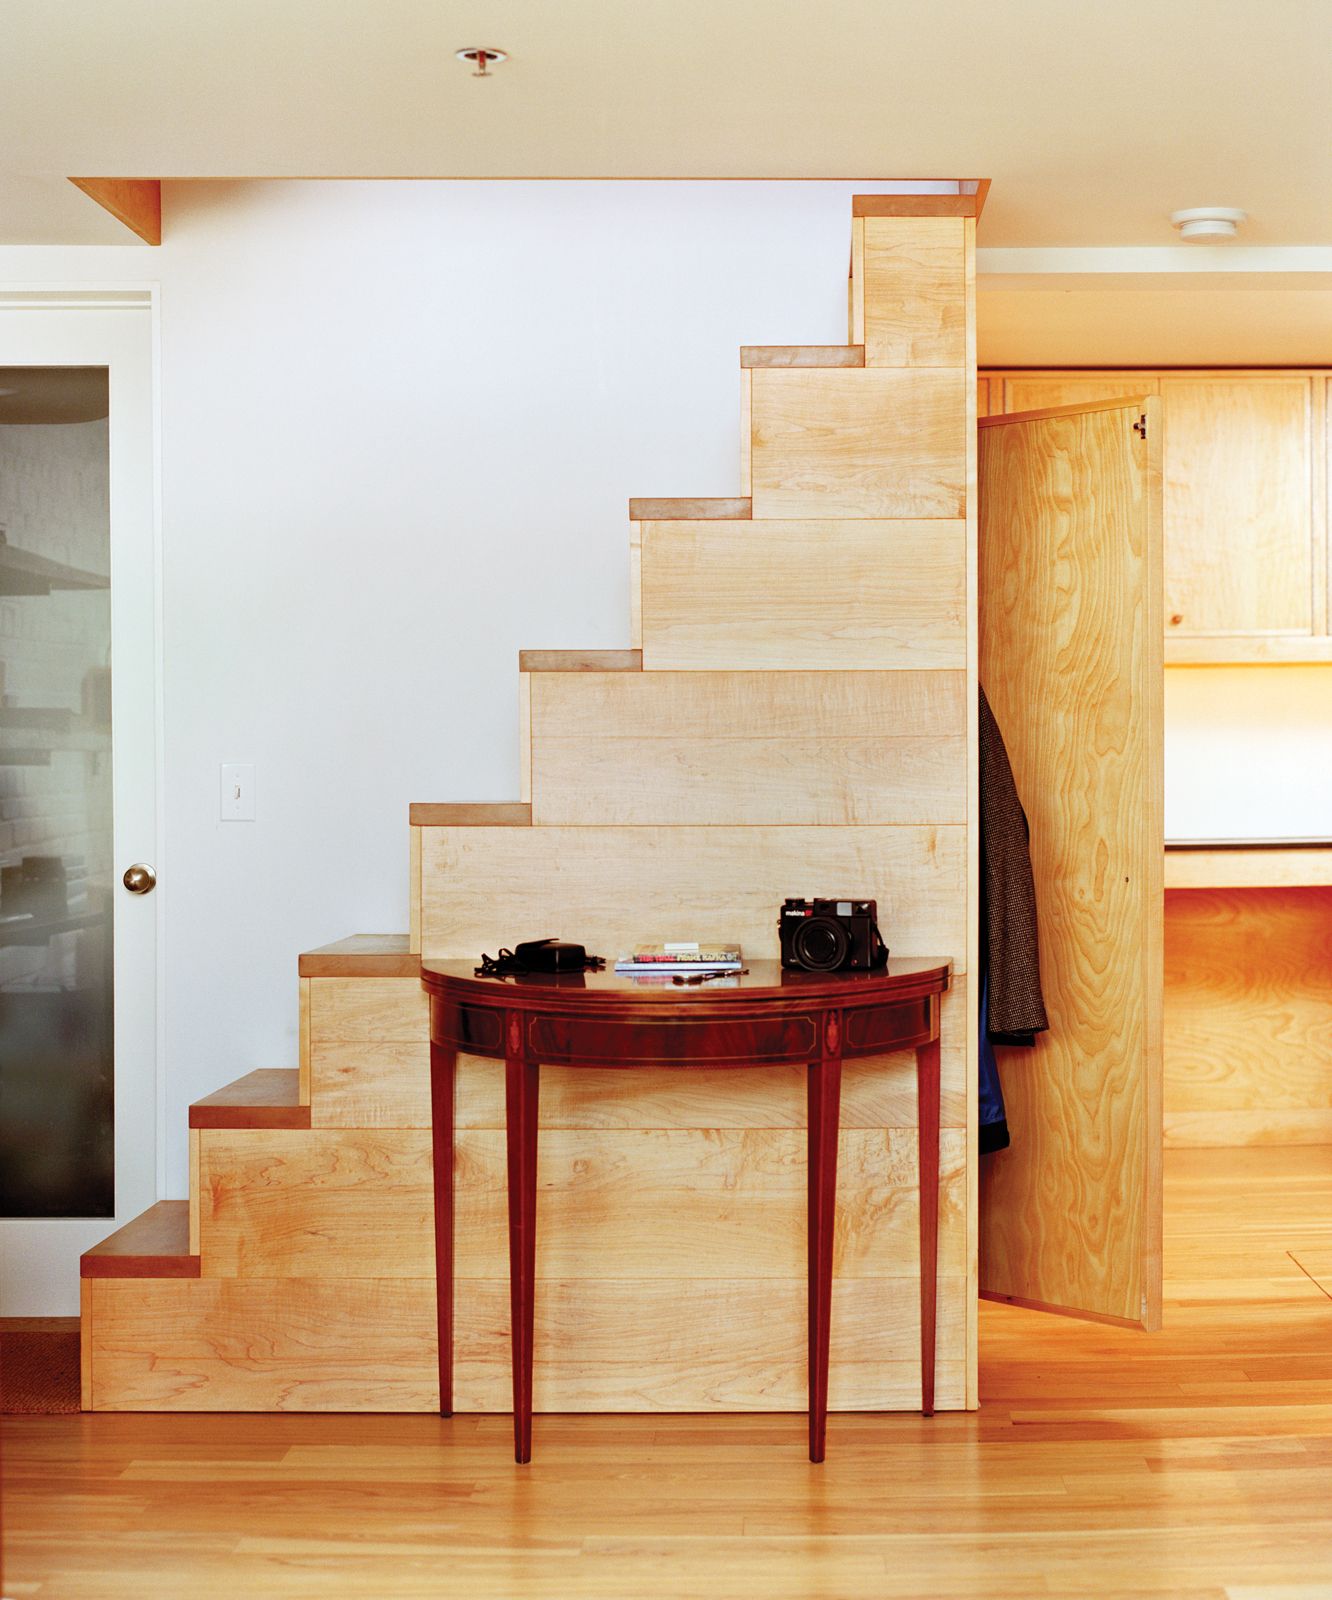 Kidd Fireplace Inspirational Brooklyn Modern Staircase Ideas